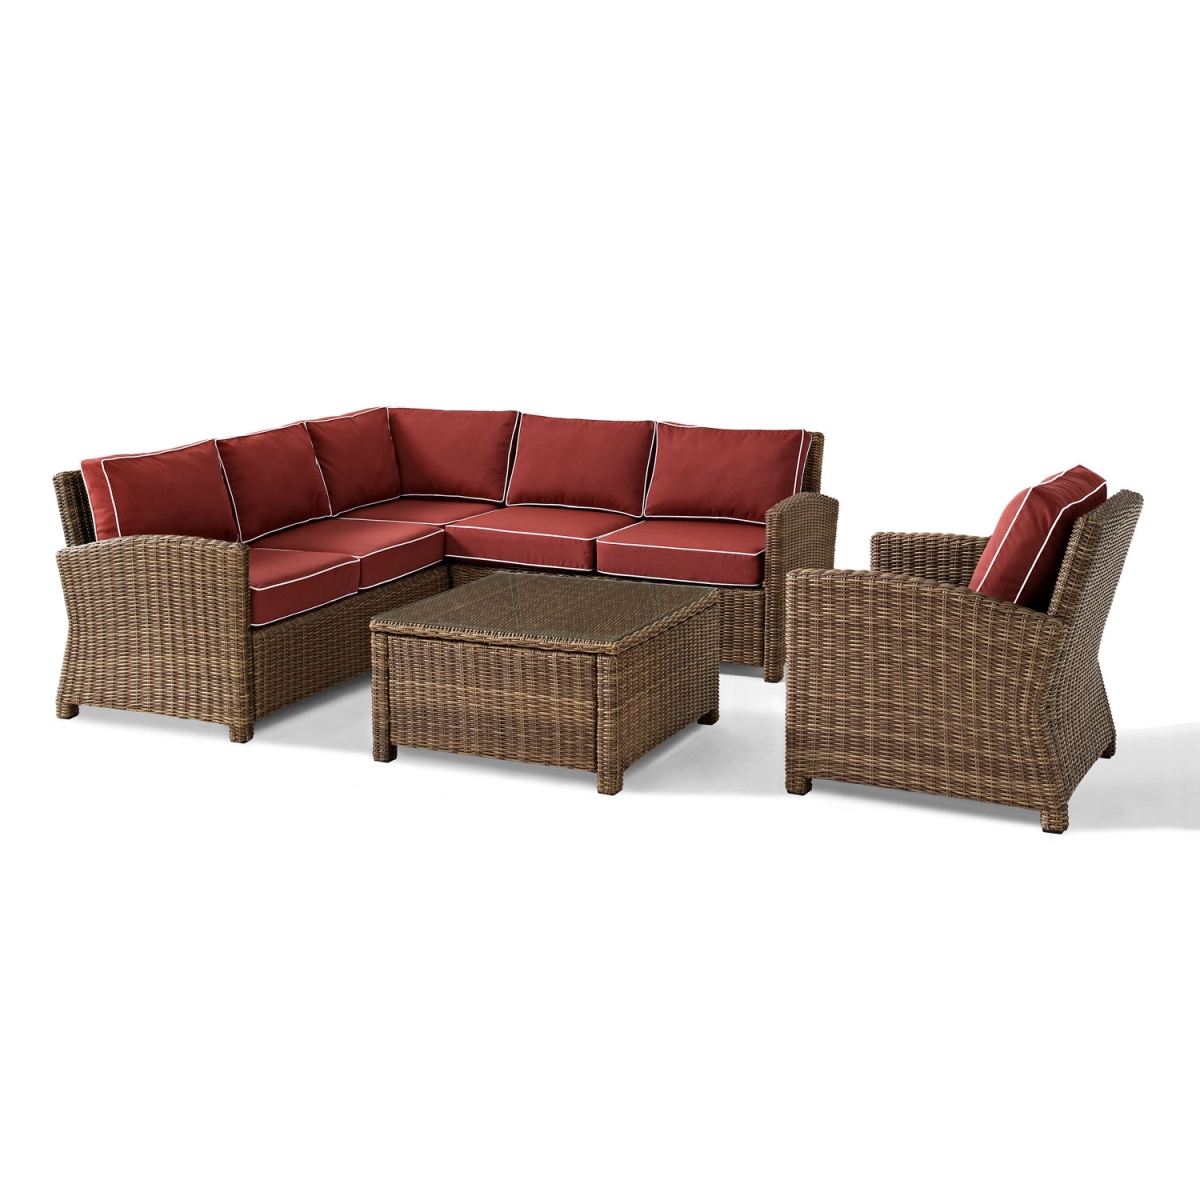 Ko70159-sg 5 Piece Bradenton Outdoor Wicker Seating Set With Sangria Cushions - Weathered Brown